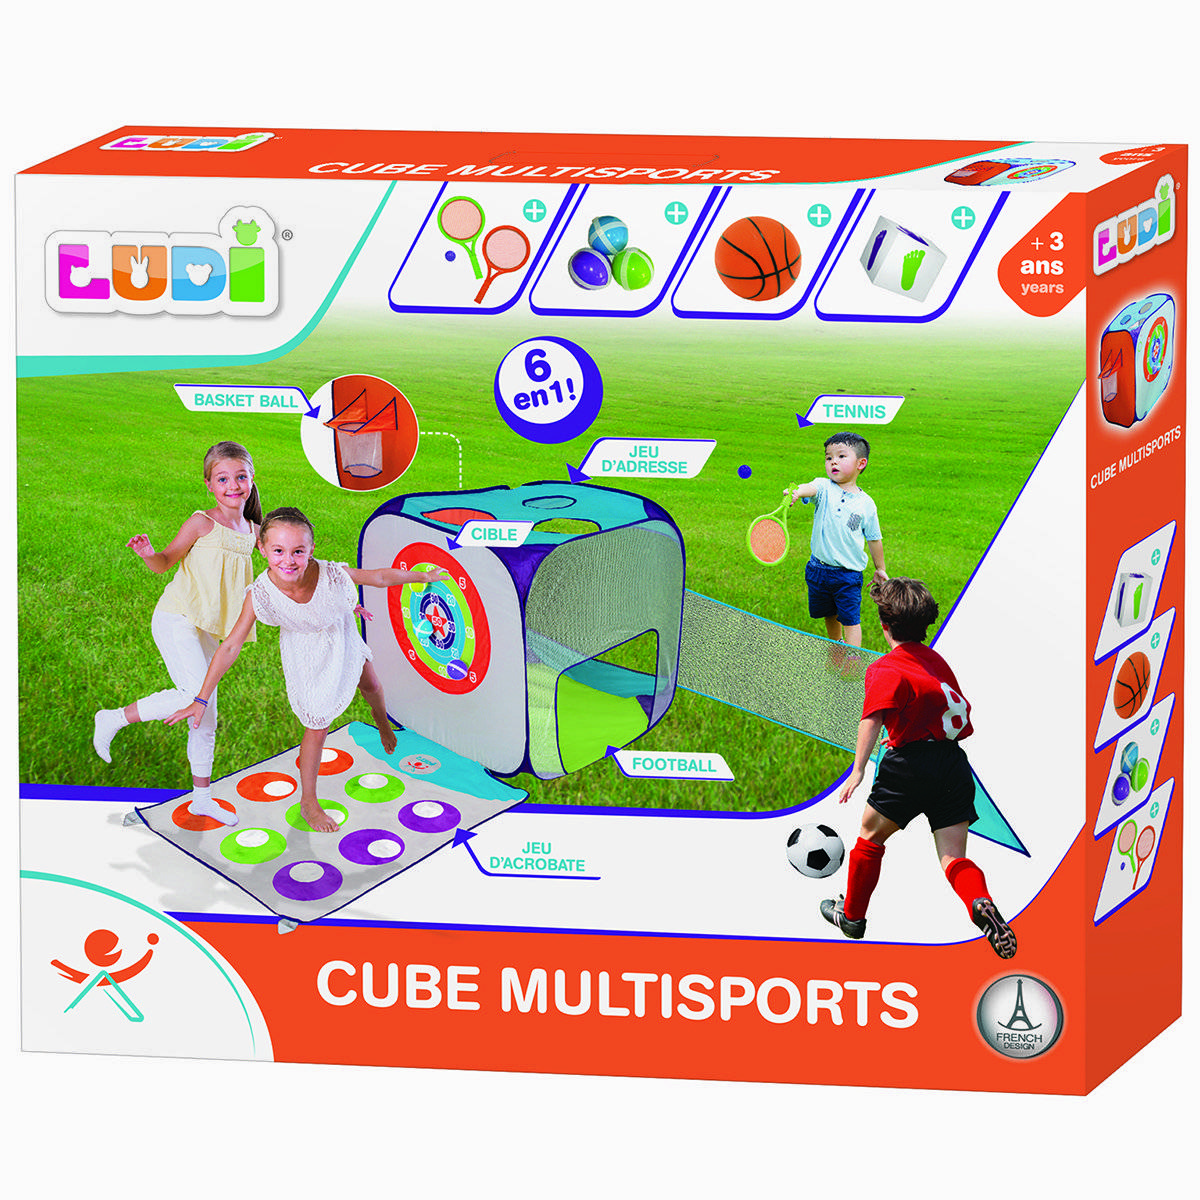 Cube multisports